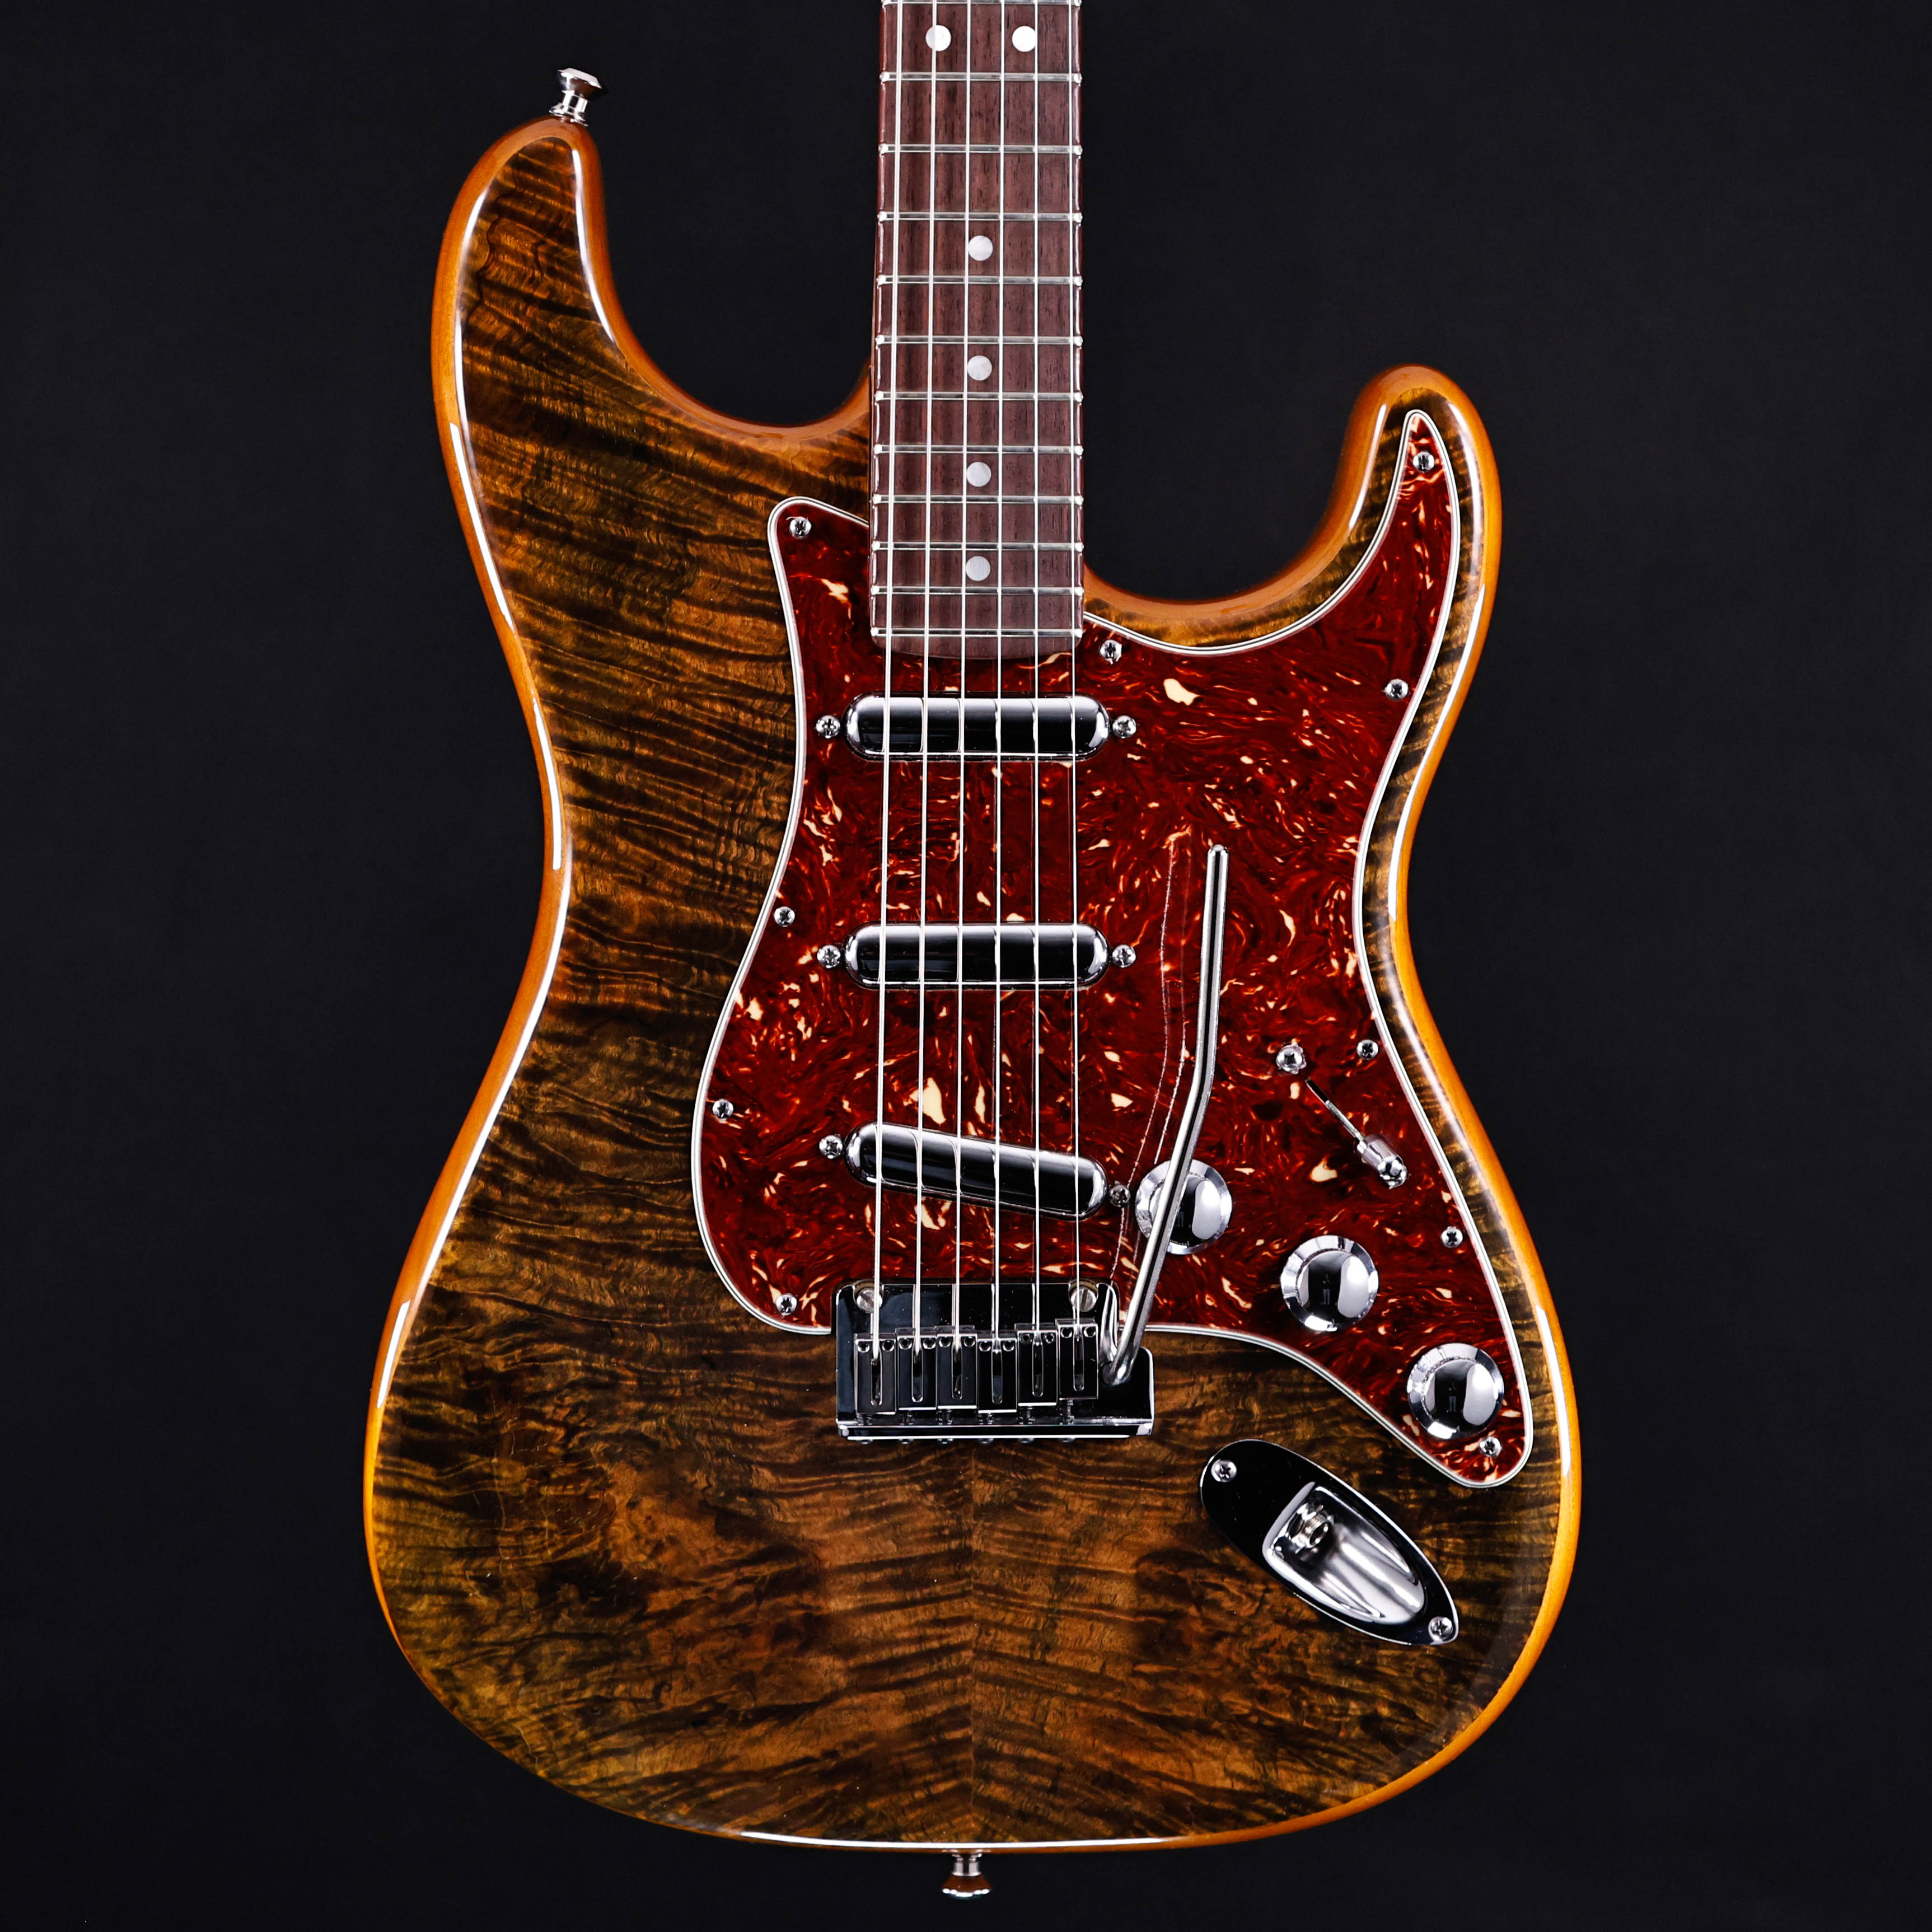 Fender Custom Shop Spalted Maple Top Artisan Stratocaster 7lbs 12.1oz